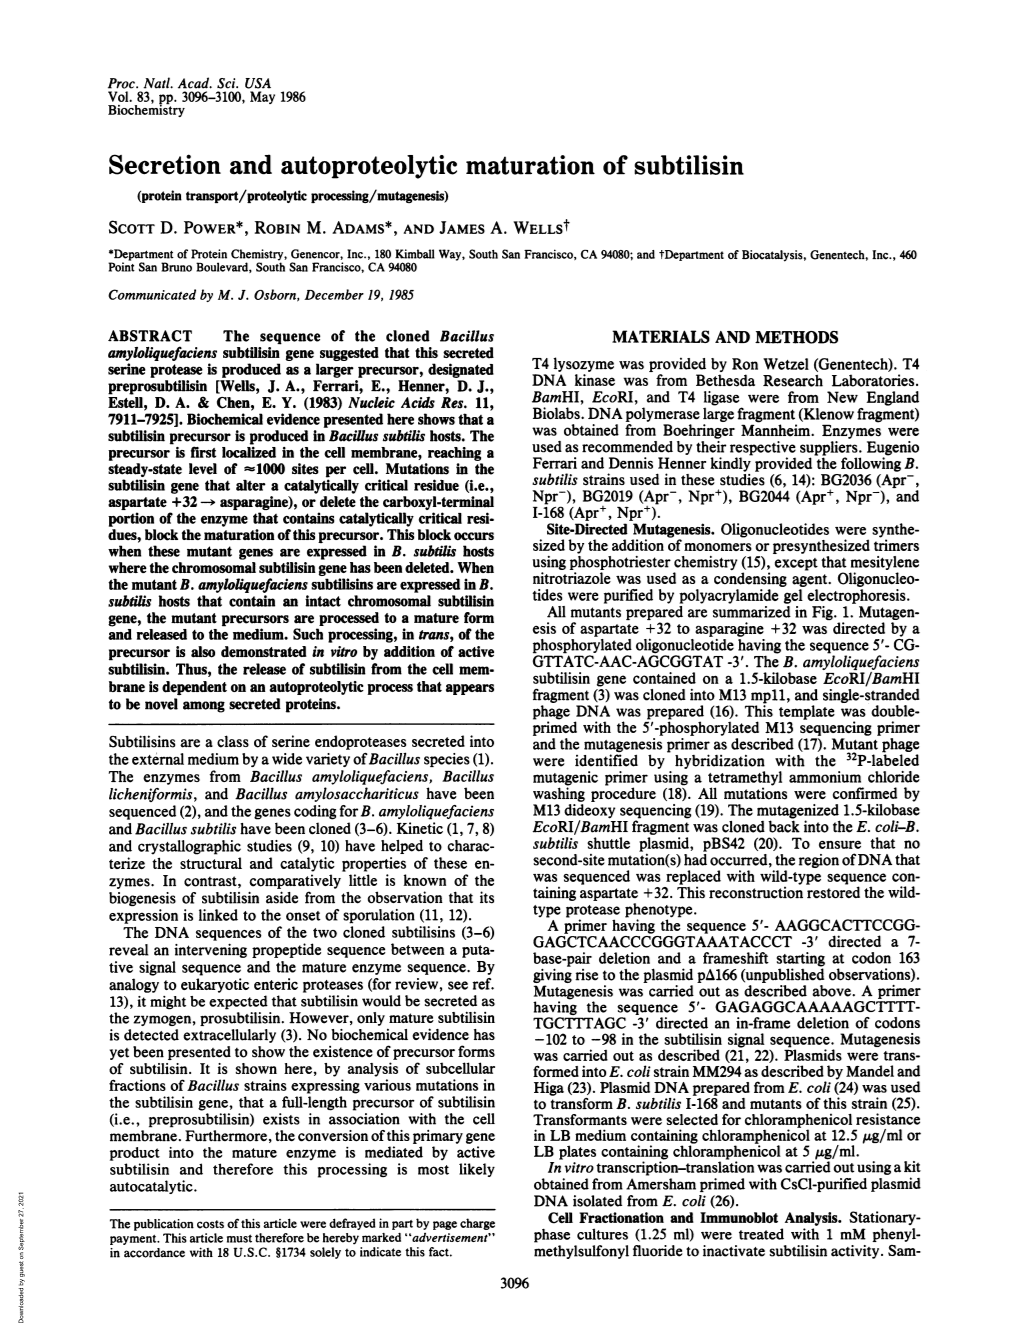 Secretion and Autoproteolytic Maturation of Subtilisin (Protein Transport/Proteolytic Processing/Mutagenesis) SCOTT D